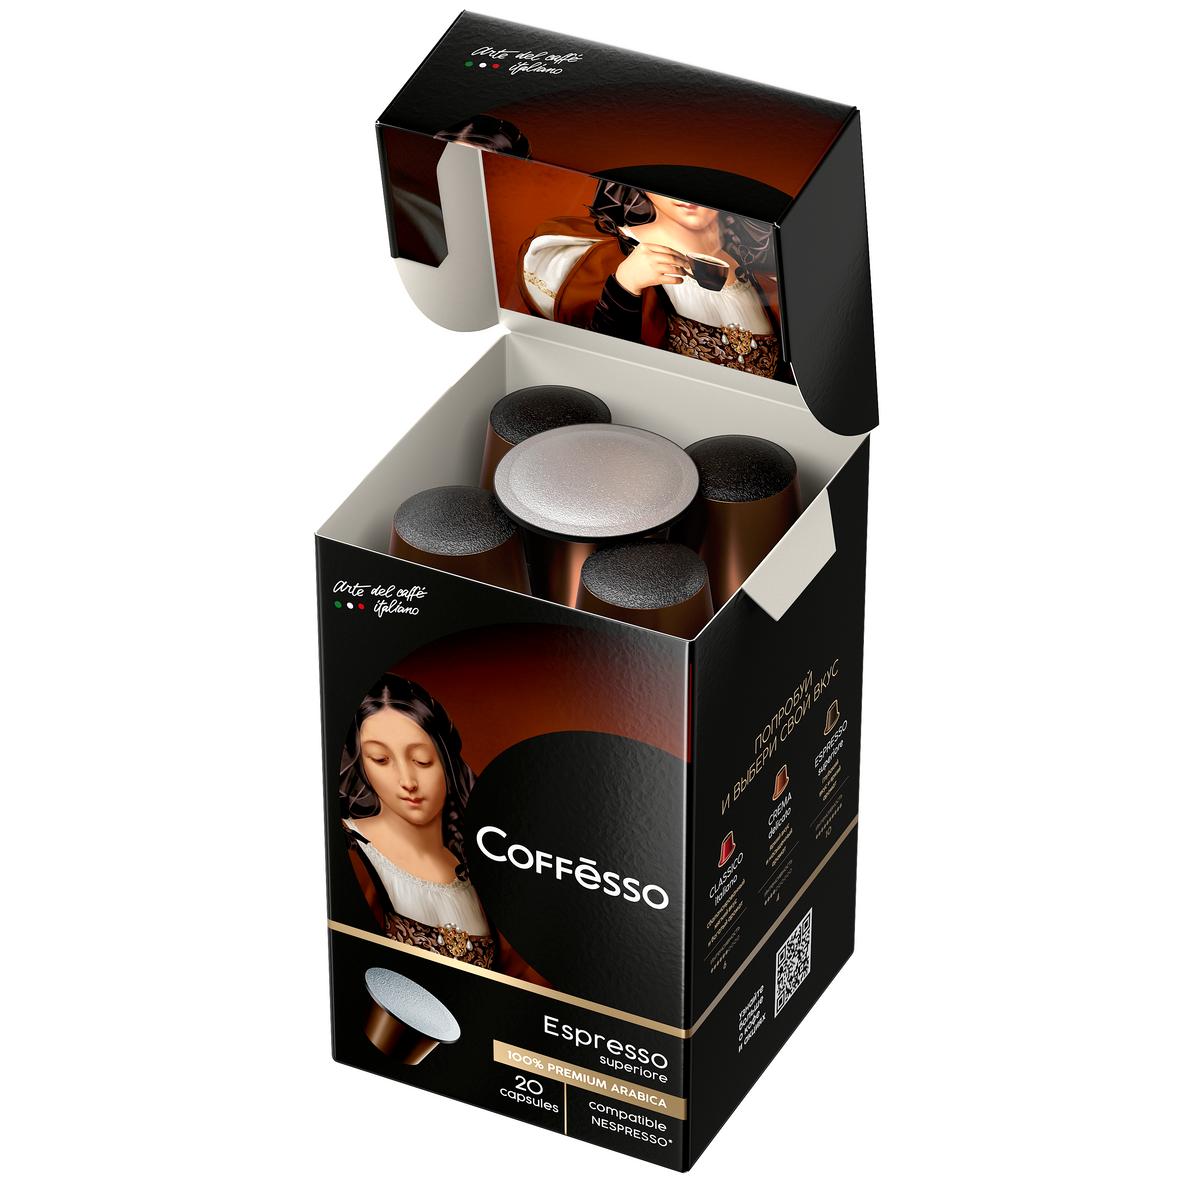 Кофе в капсулах Coffesso Espresso Superiore 20 шт по 5 гр - фото 3